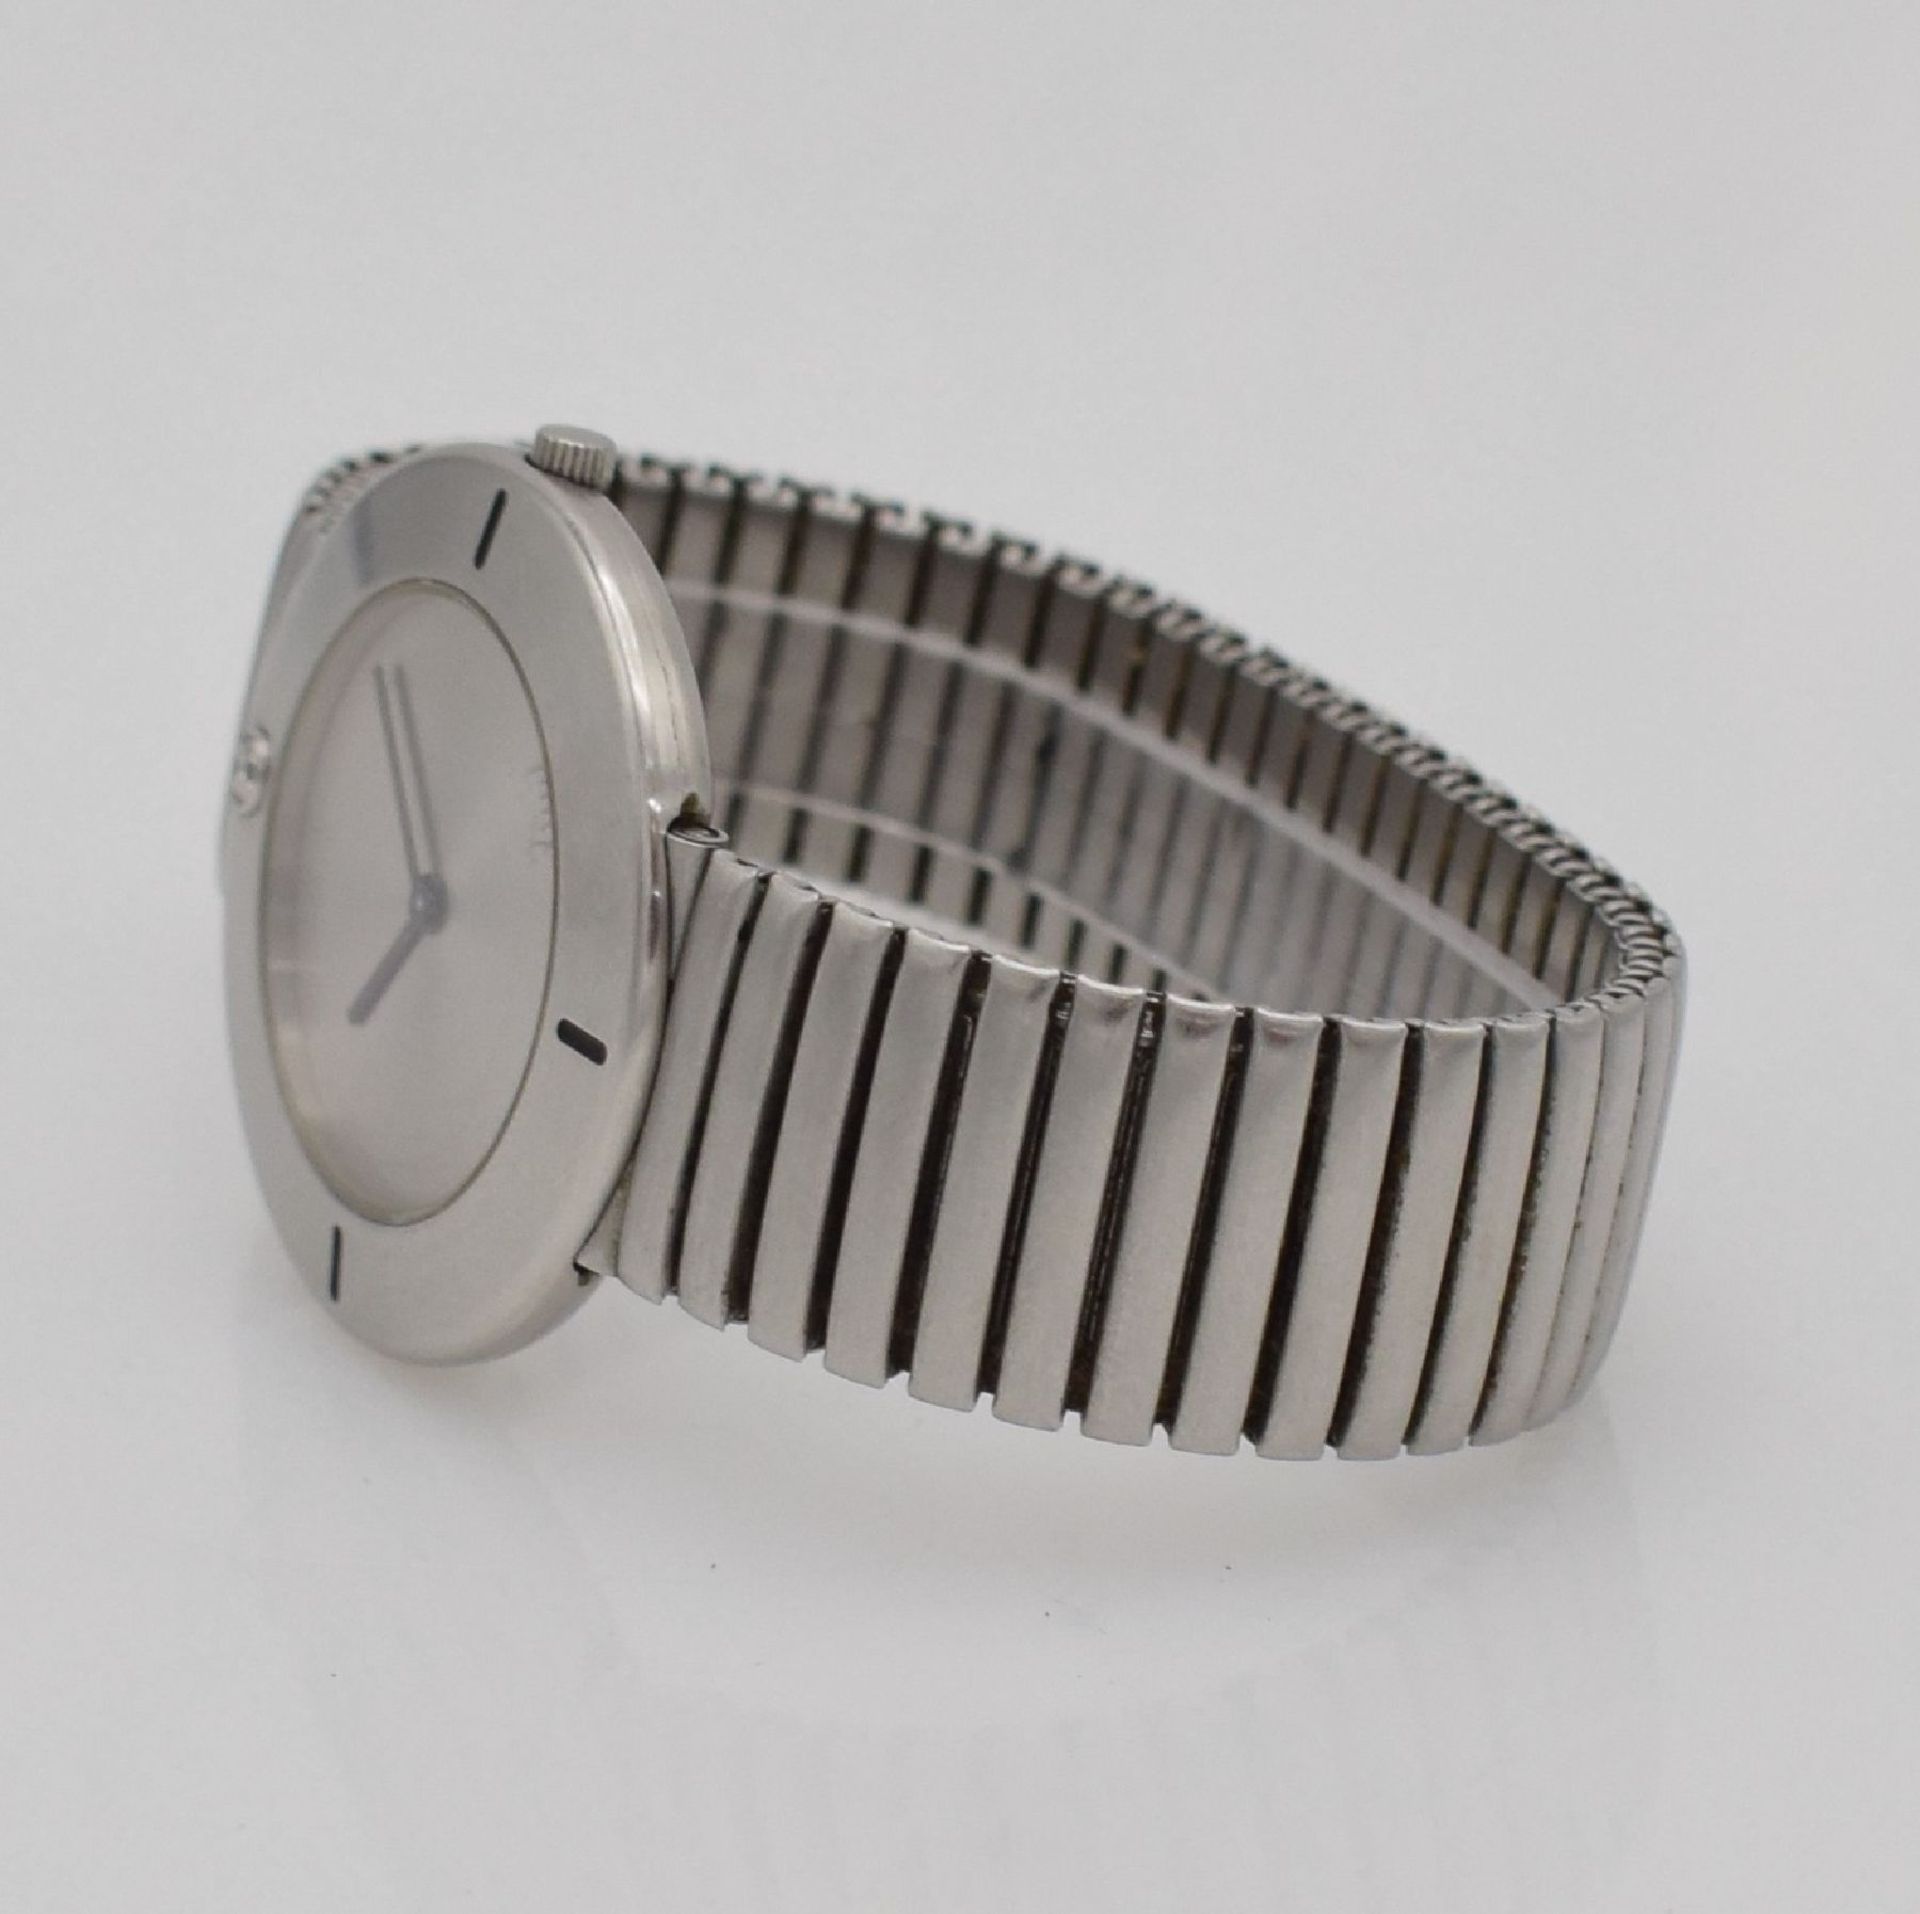 BUNZ wristwatch in stainless steel with diamond, Switzerland sold according to papers in November - Bild 5 aus 8